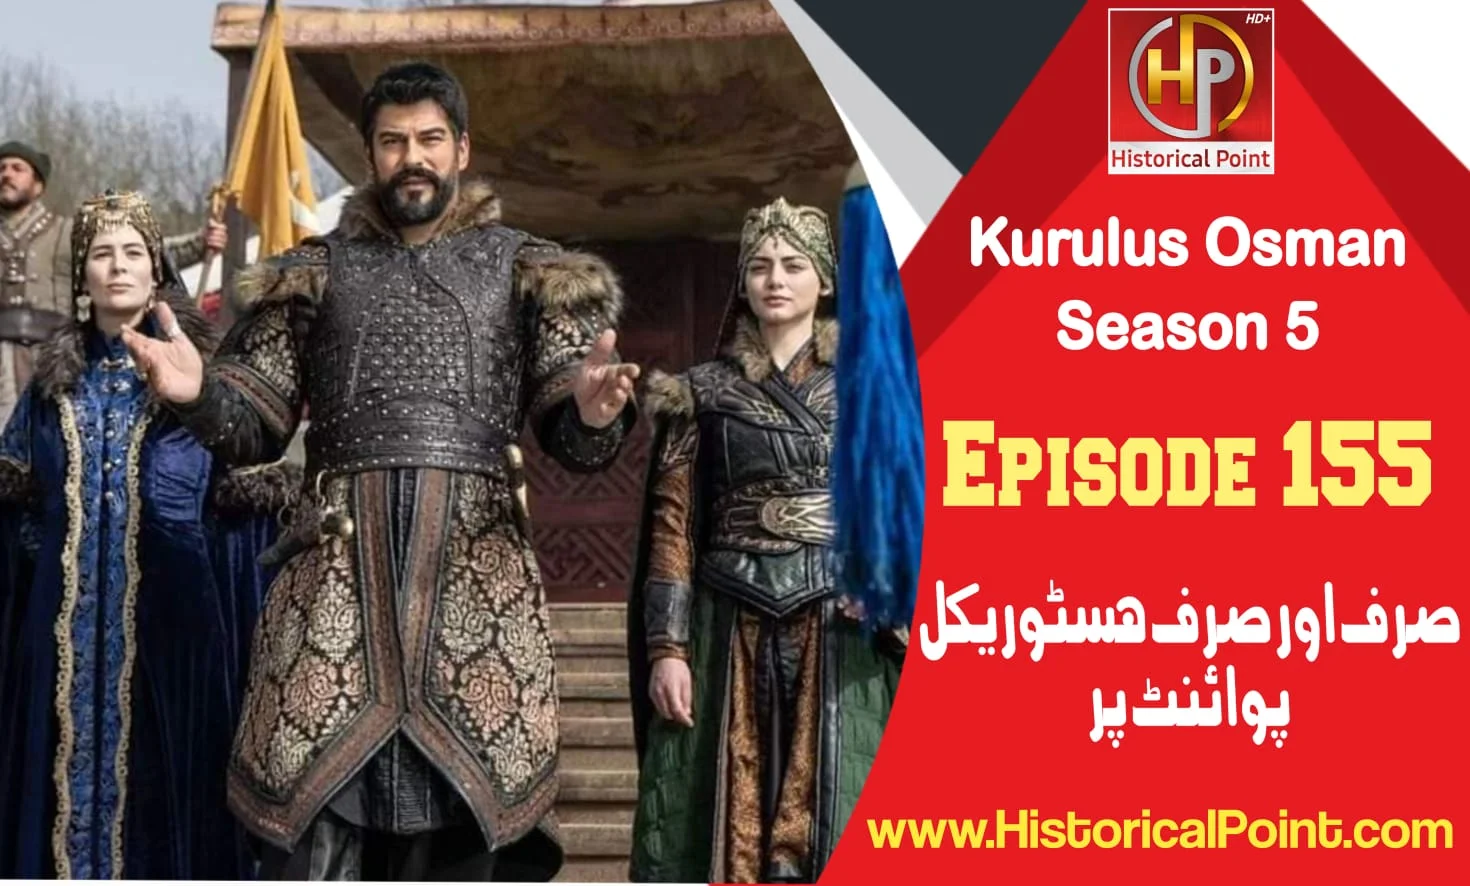 Kurulus Osman Episode 155 in urdu subtitles